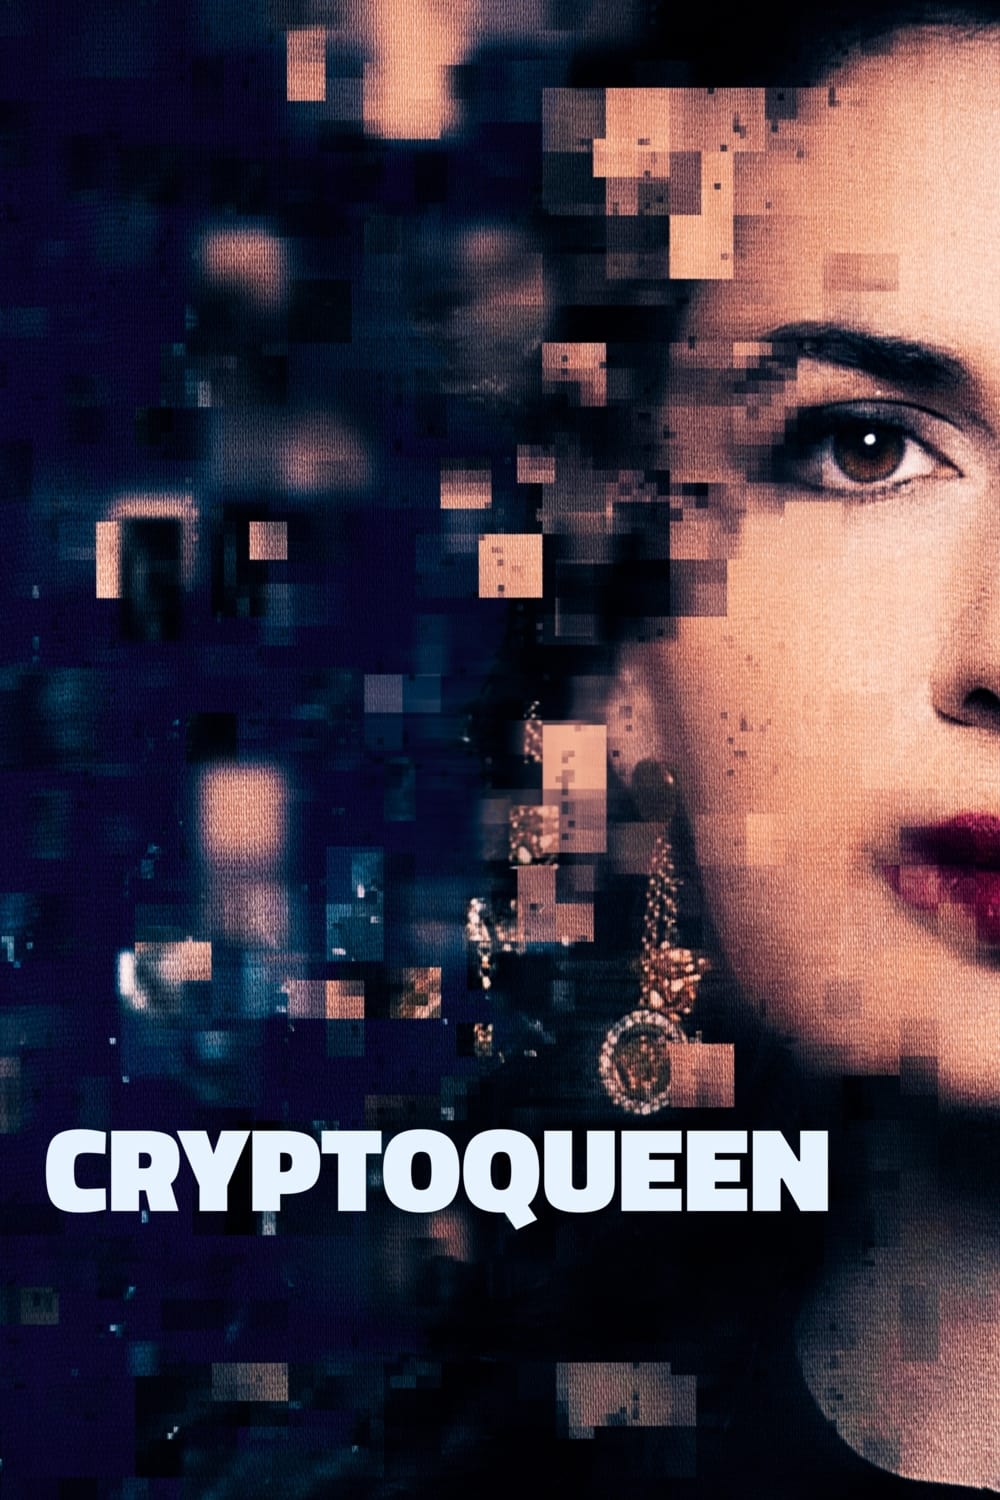 Cryptoqueen: The OneCoin Scam